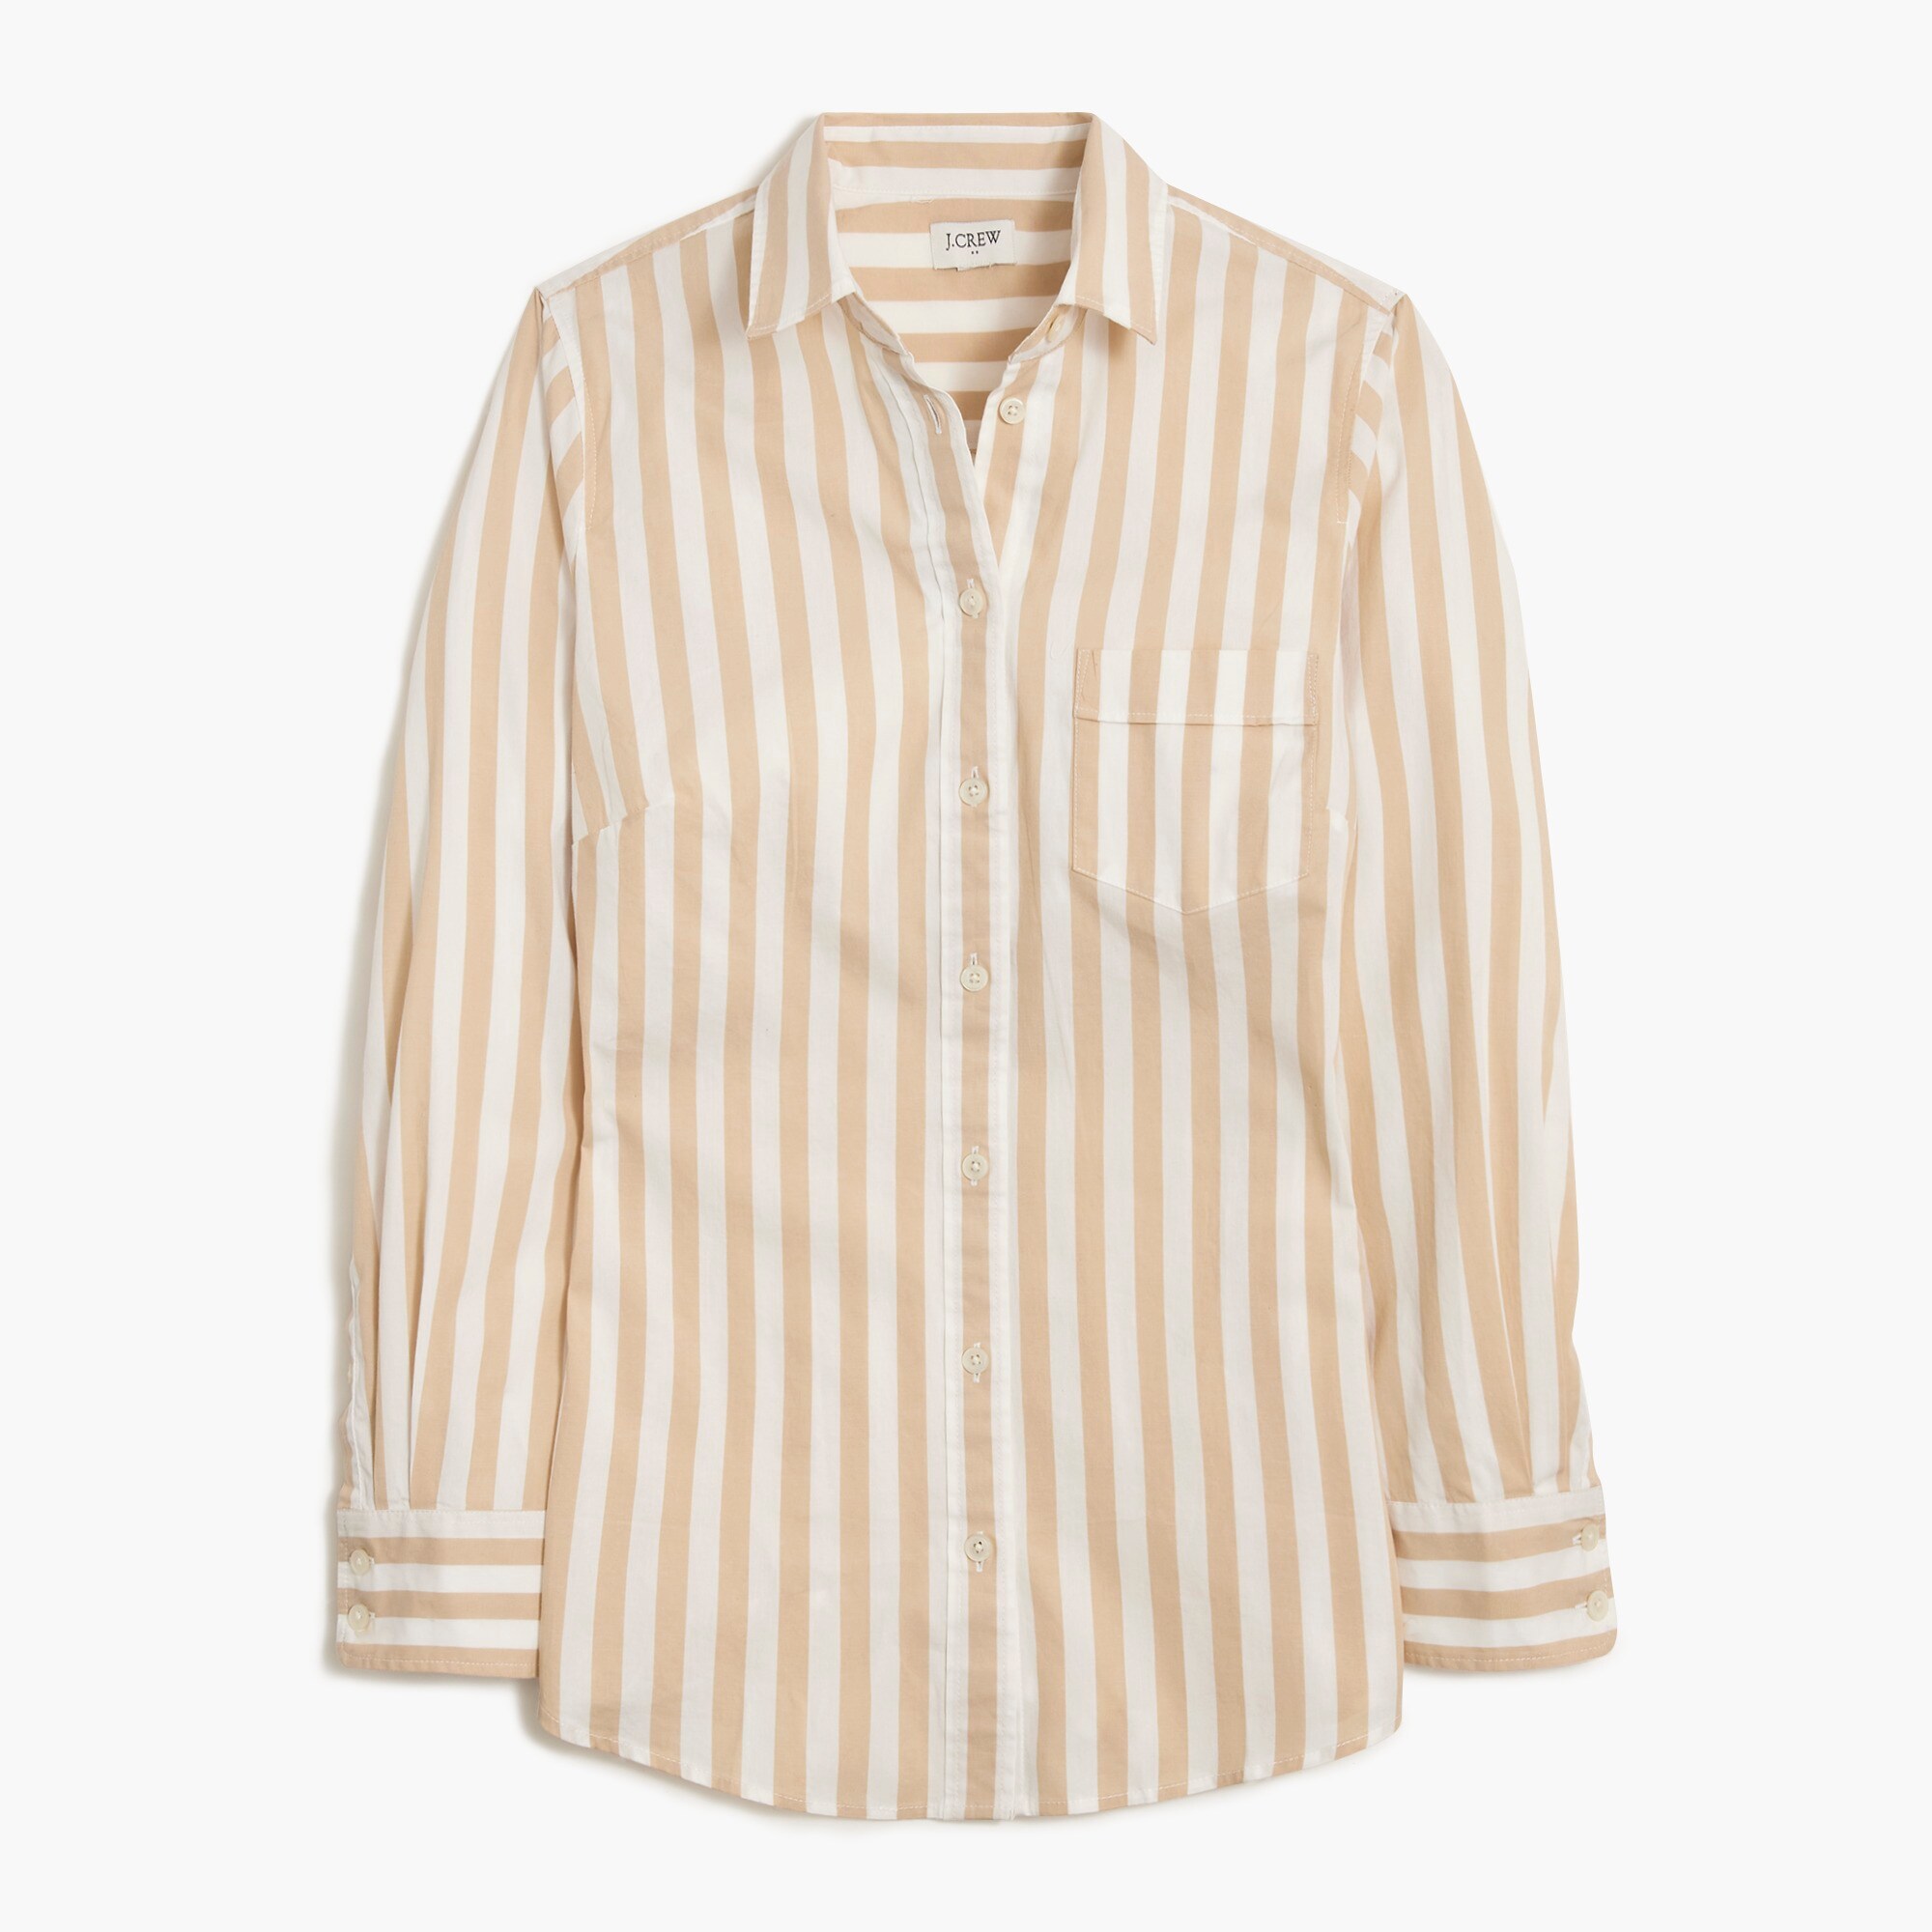  Petite lightweight cotton-blend shirt in signature fit